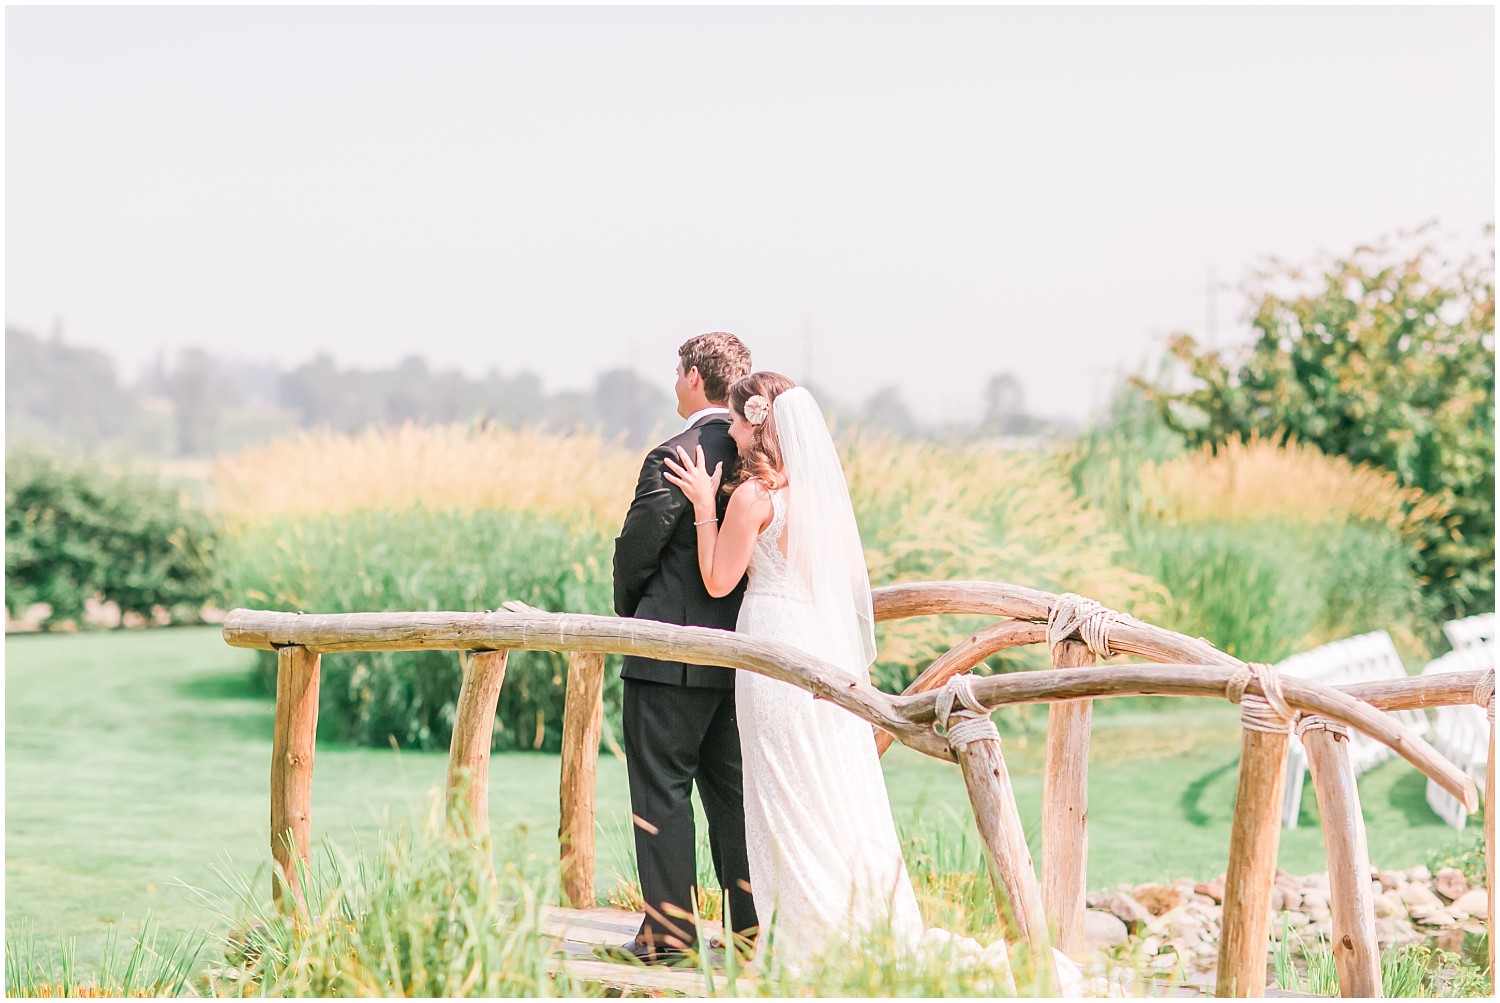 Swans Trail Farm Wedding | Charlie & Kyleann